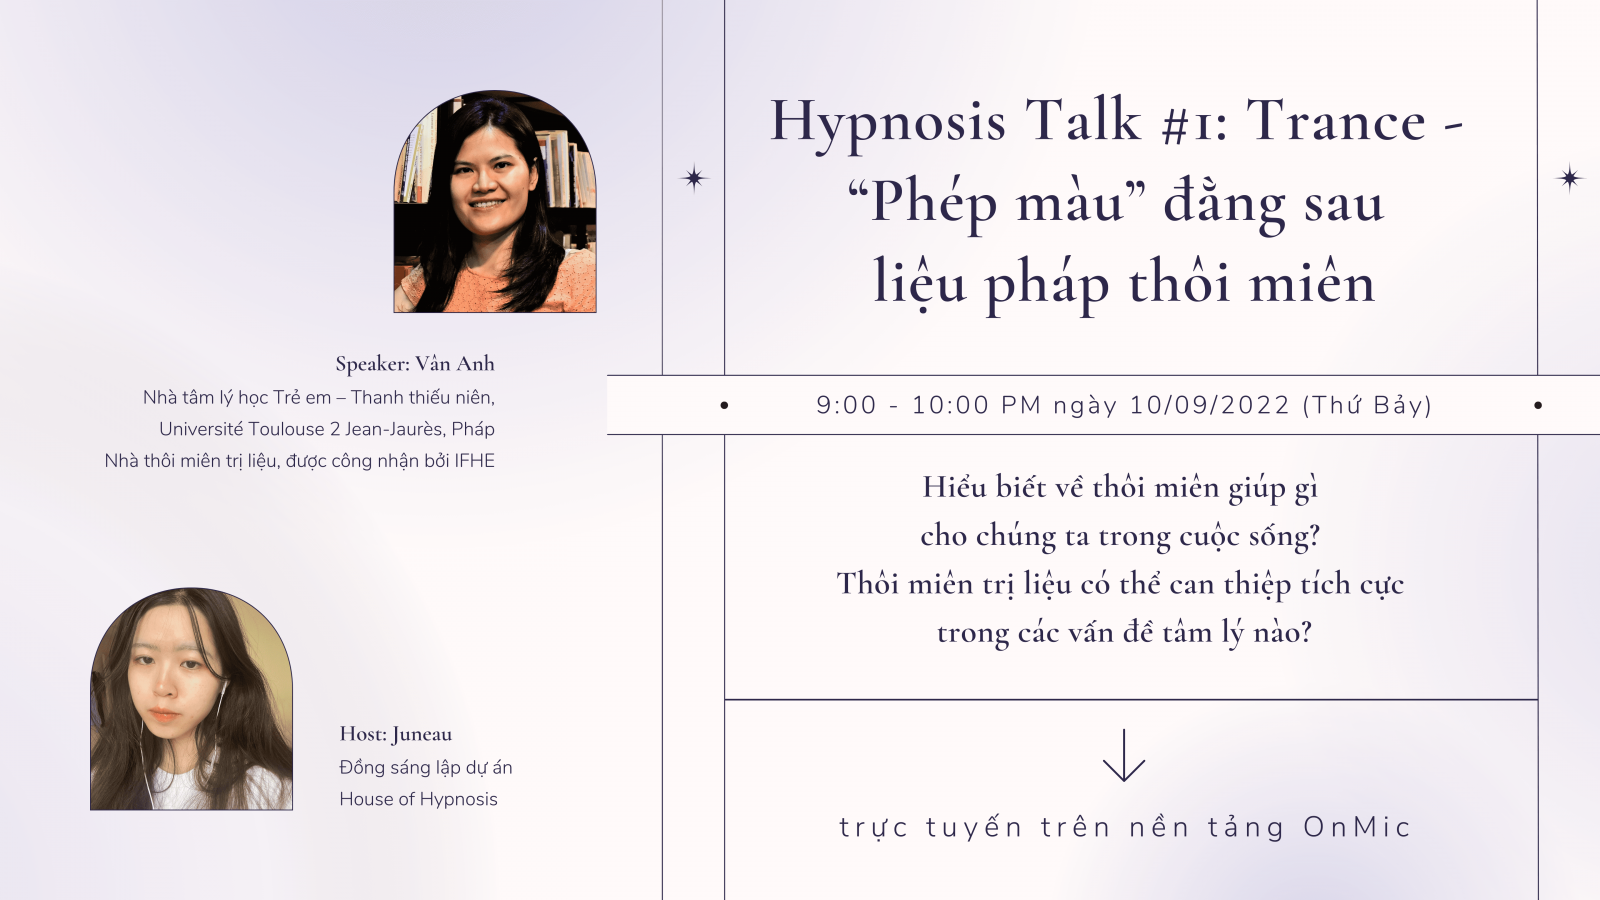 hypnosis-talk-1-trance-phep-mau-lieu-phap-thoi-mien